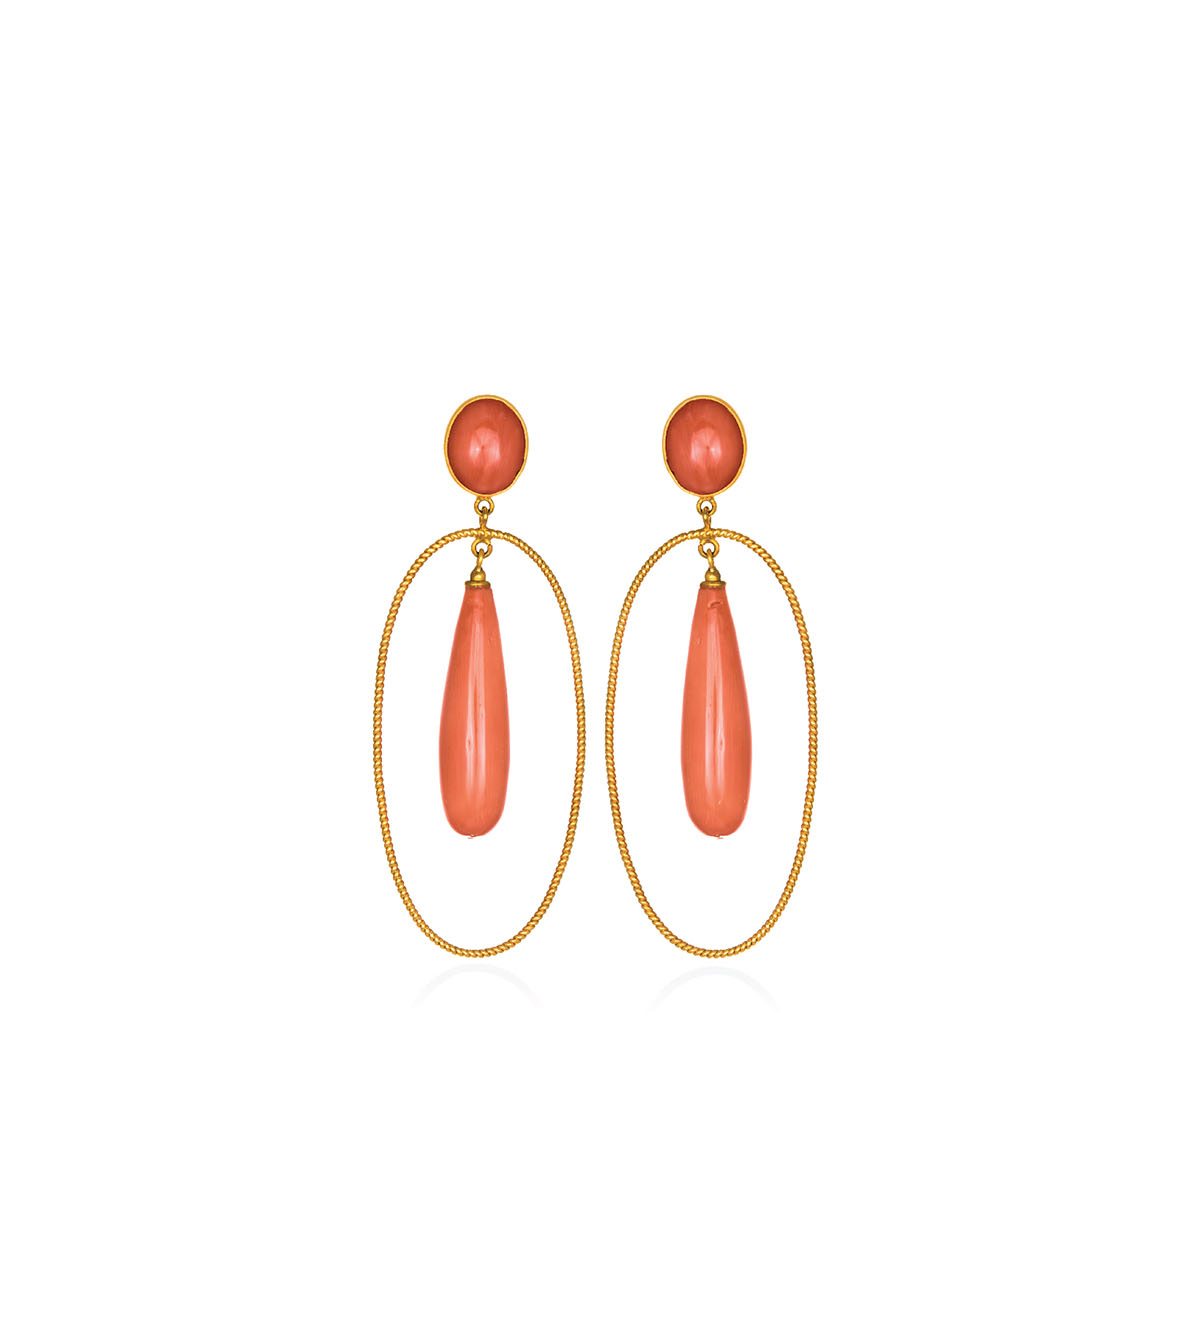 Pendulum Earrings with orange coral